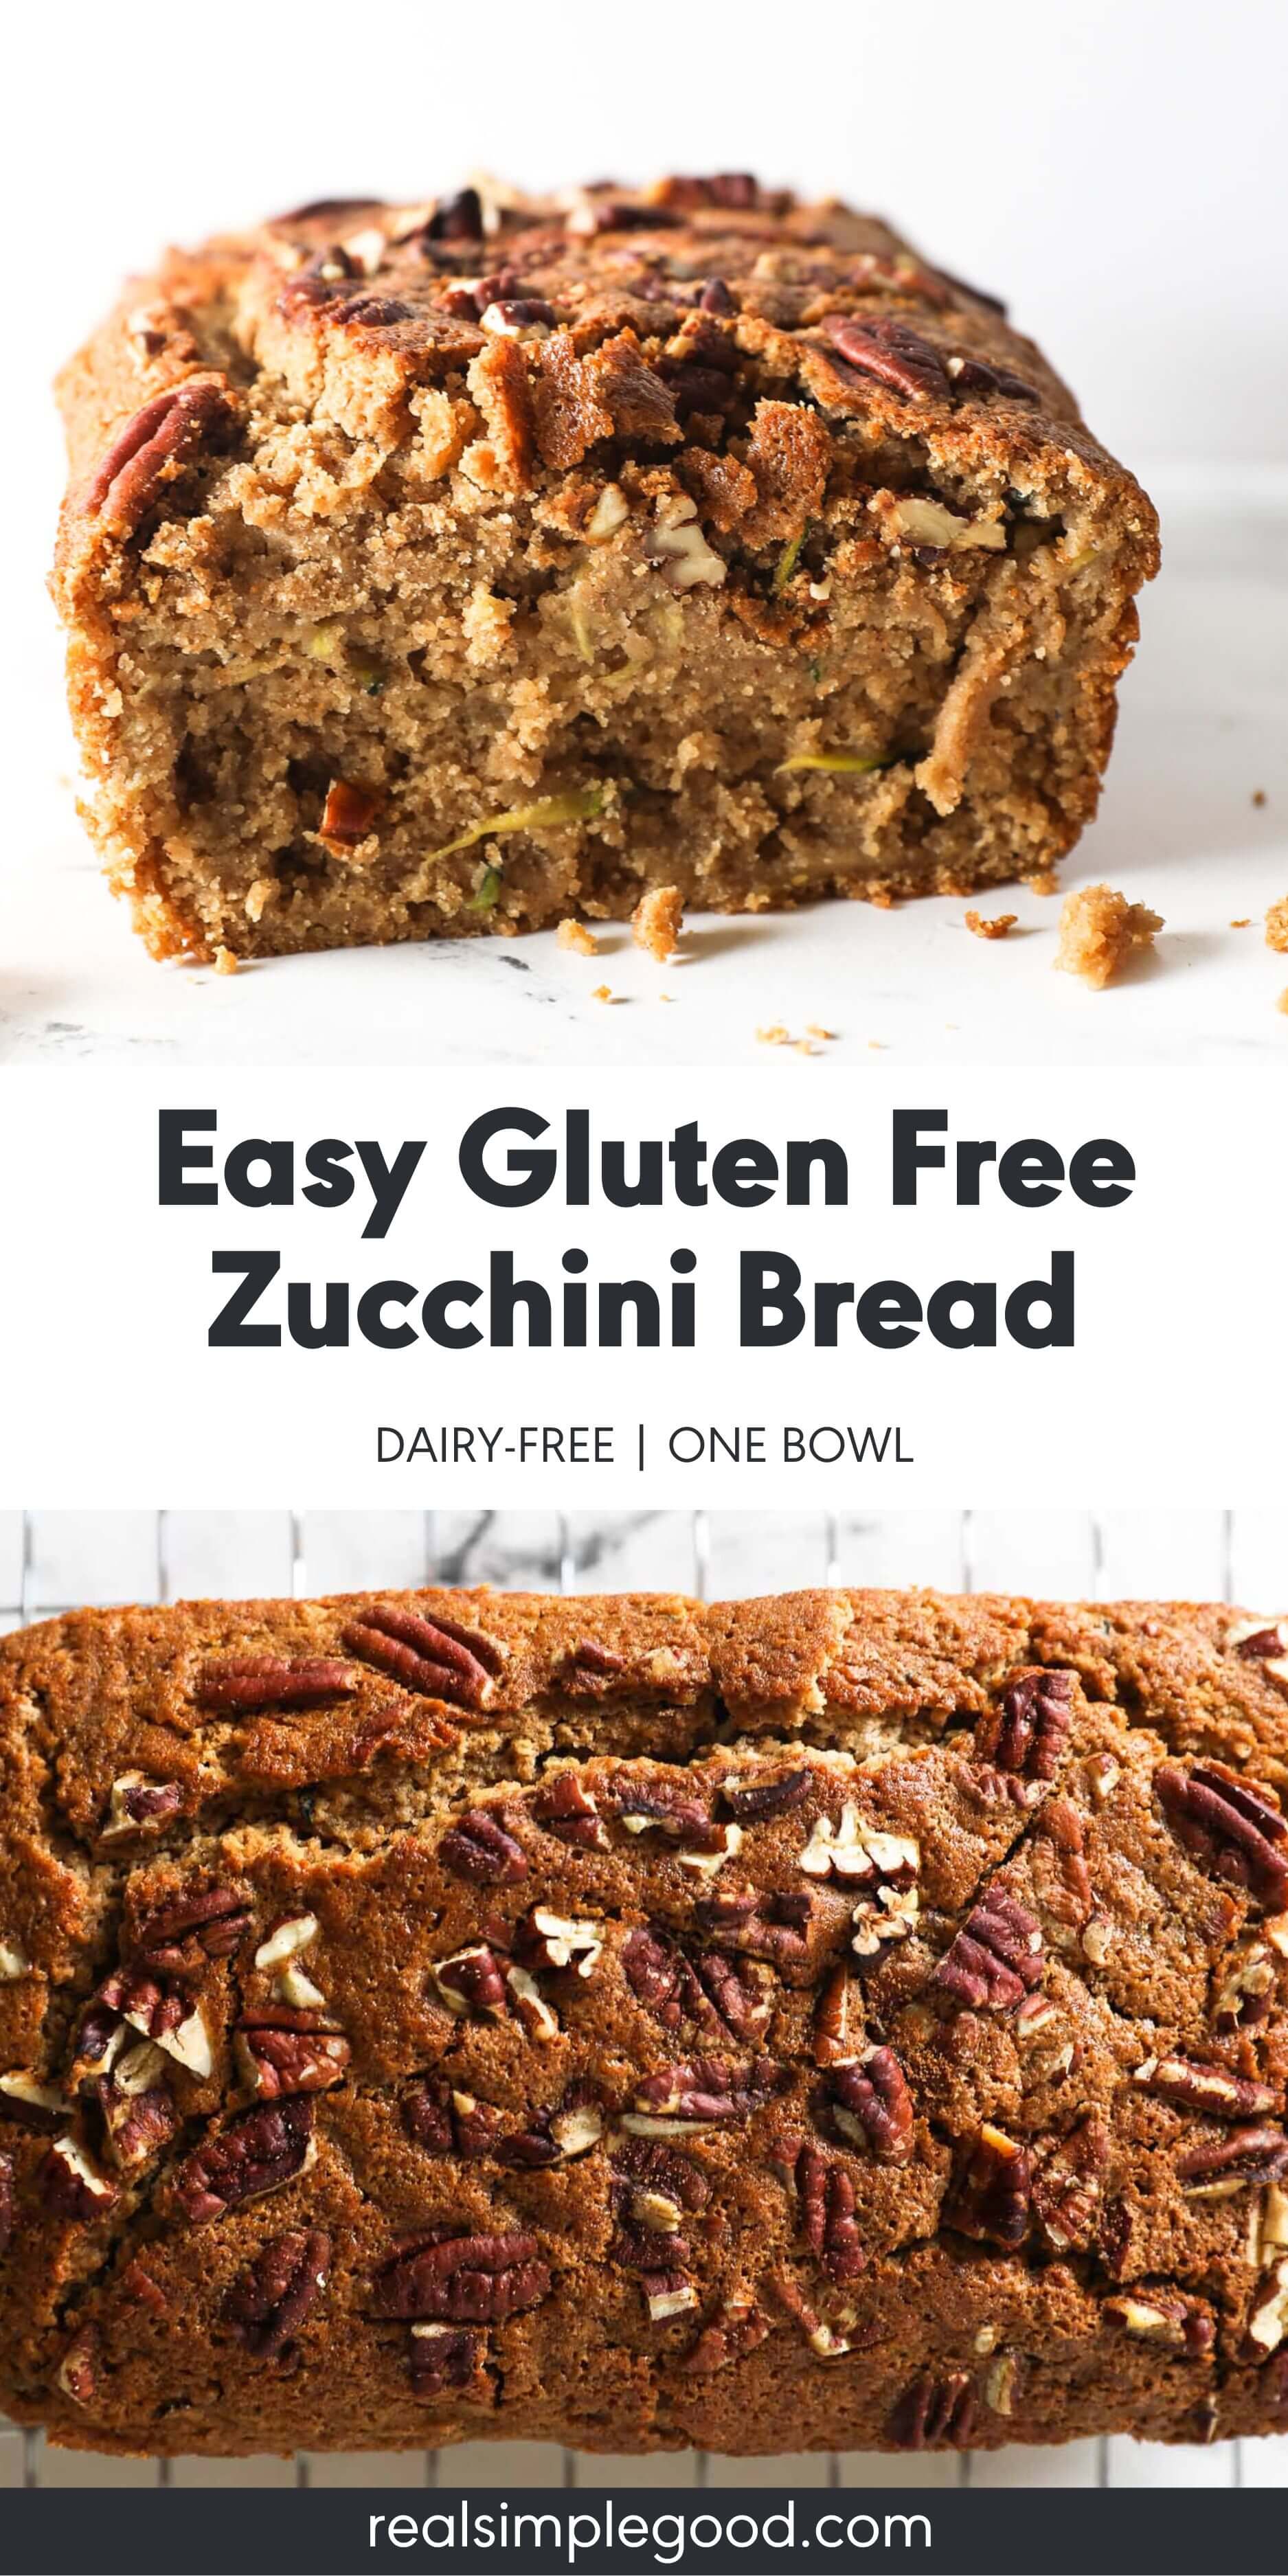 Easy Gluten Free Zucchini Bread (Vegan, too!)